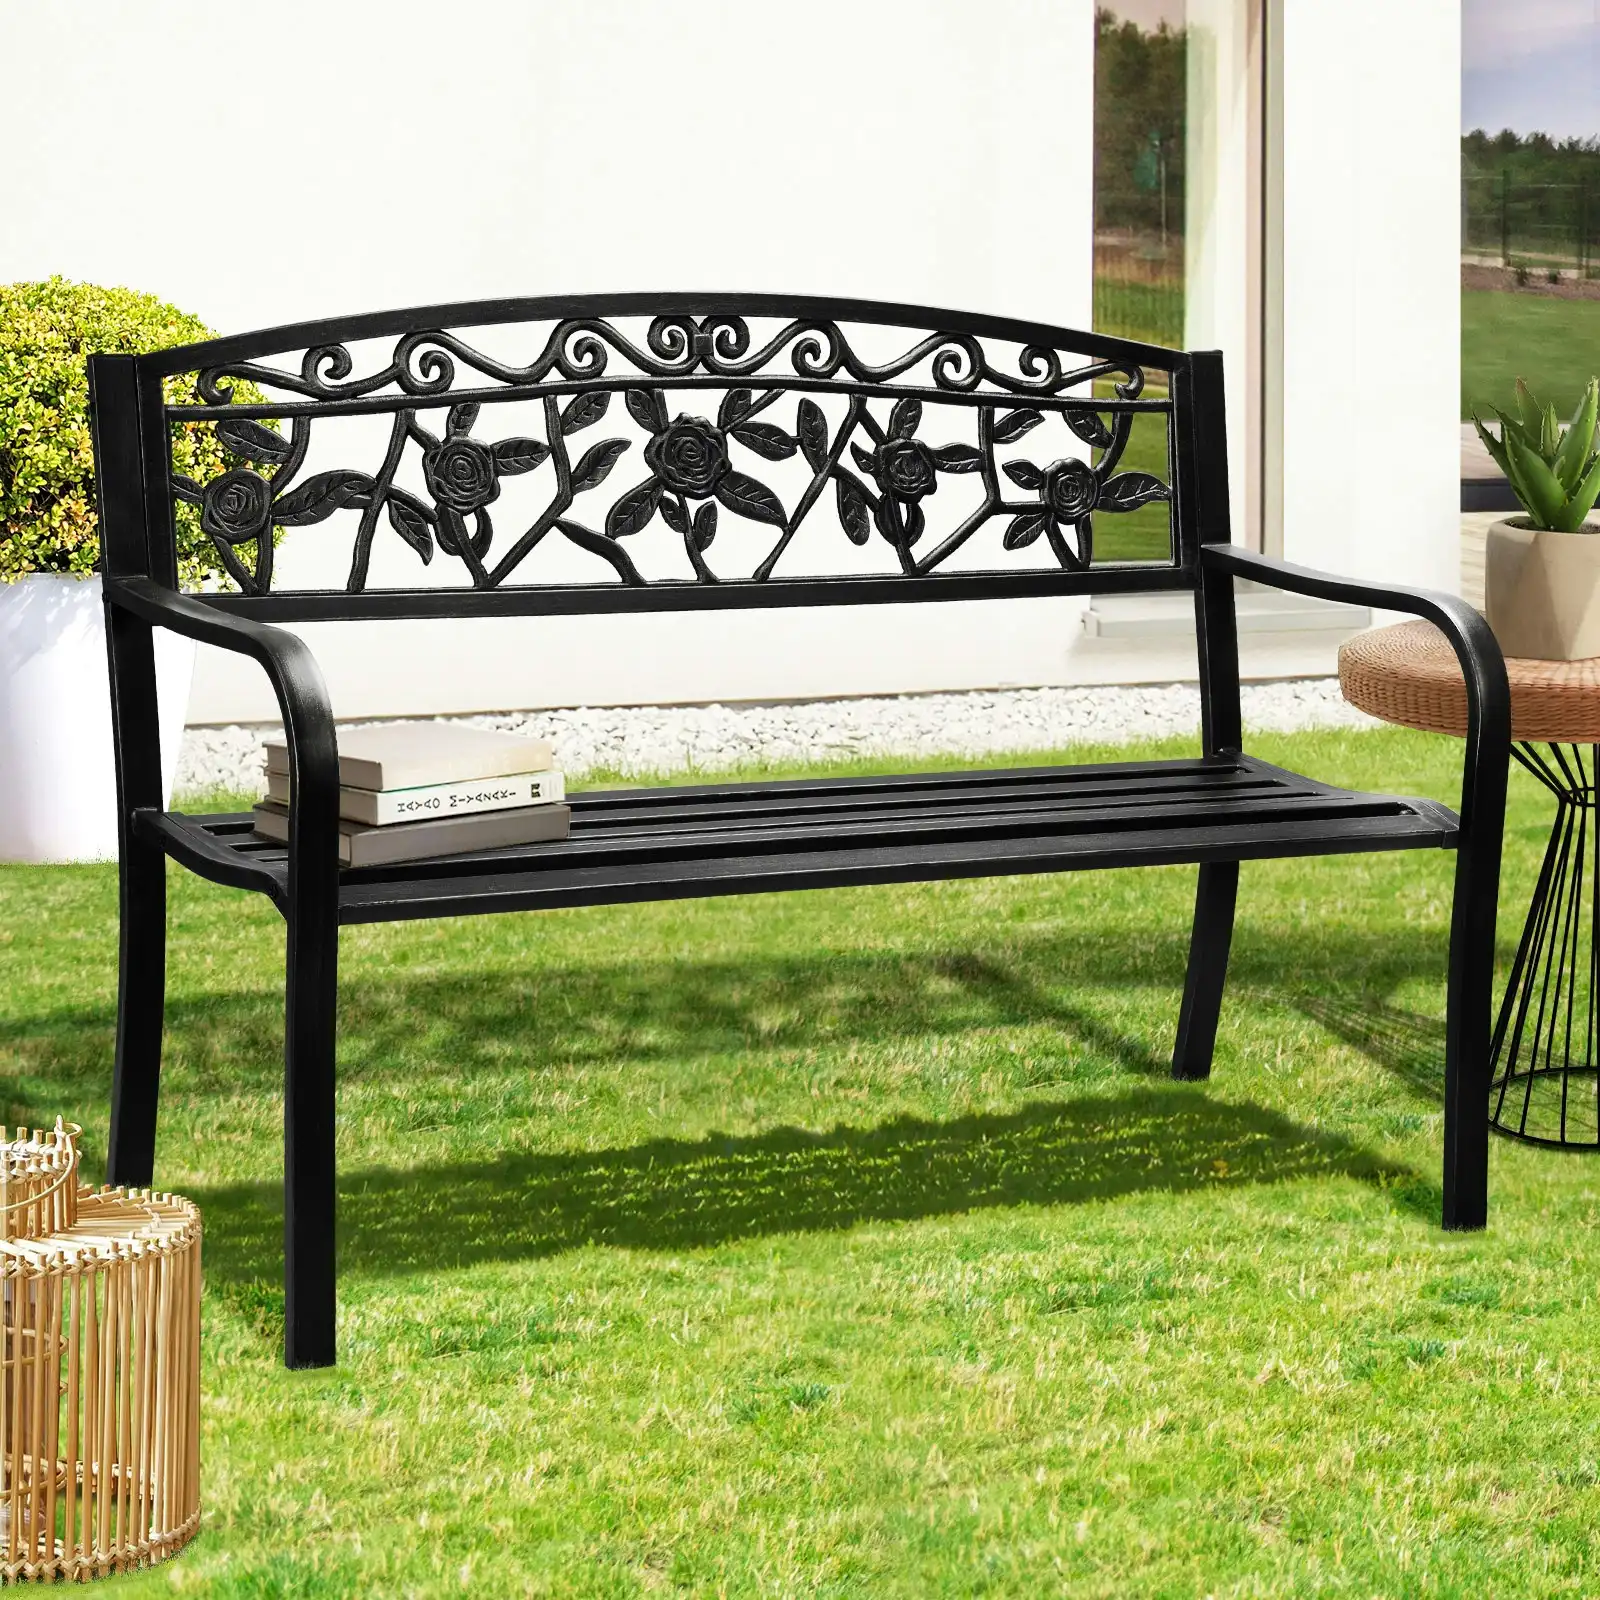 Livsip Garden Bench Seat Outdoor Furniture Patio Park Backyard Chair Black